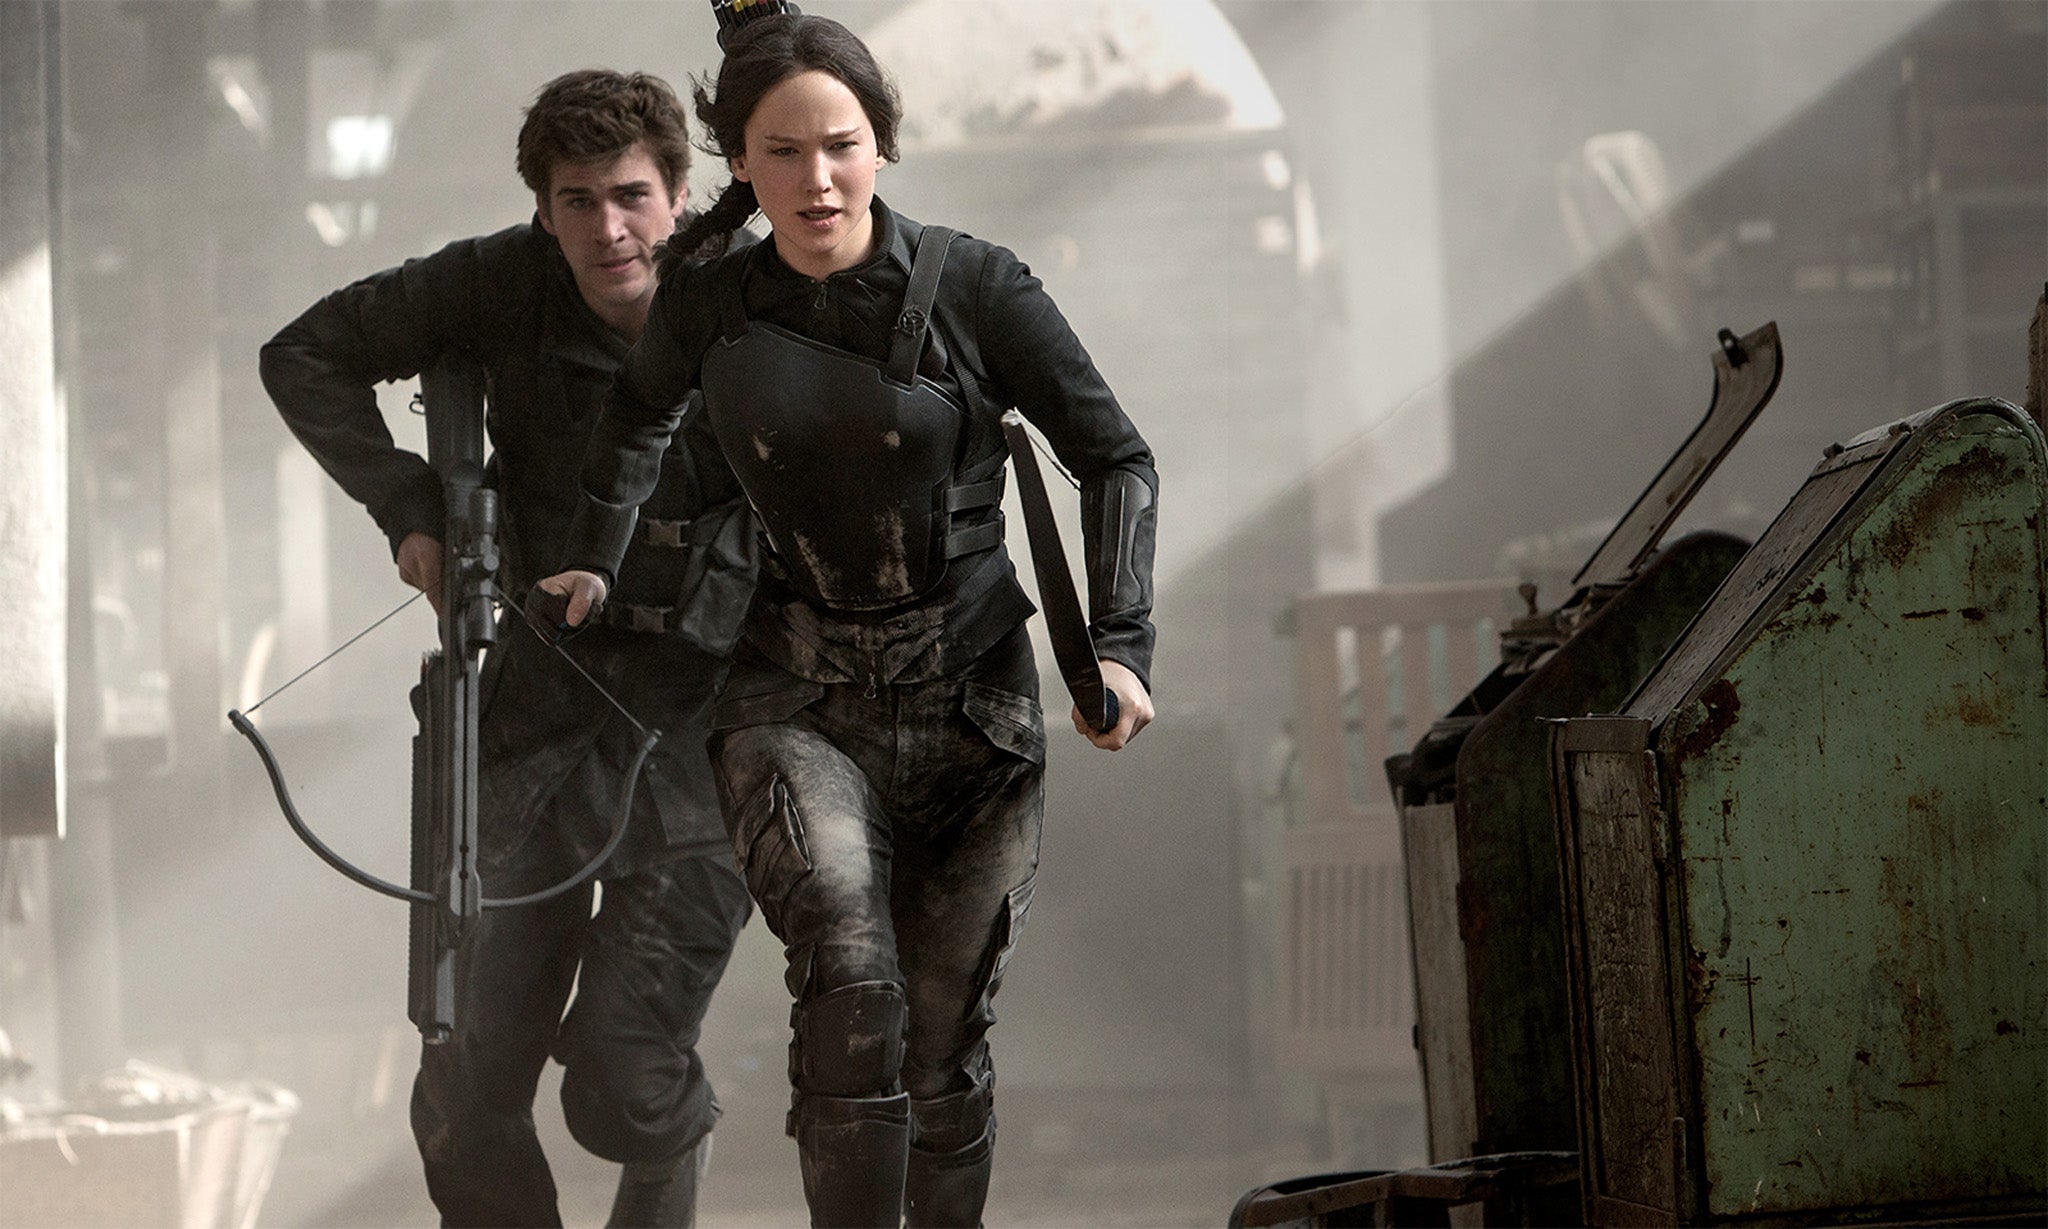 Jennifer Lawrence, Hunger Games cast unveil Mockingjay - Part 2